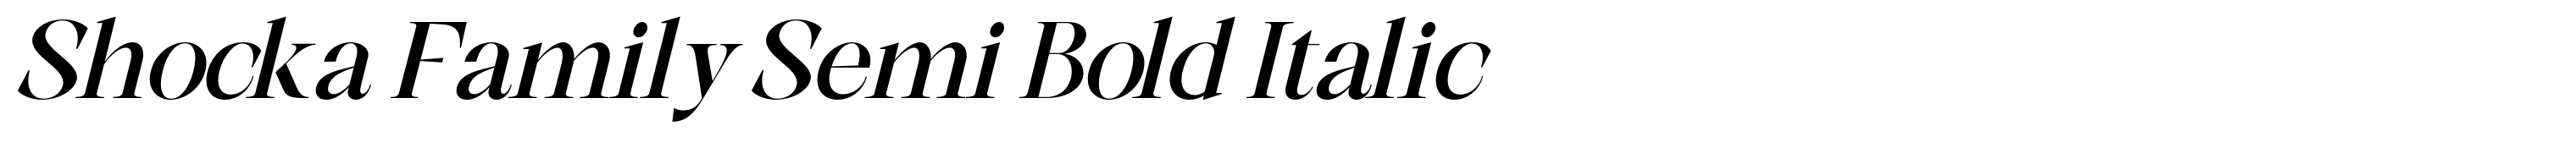 Shocka Family Semi Bold Italic